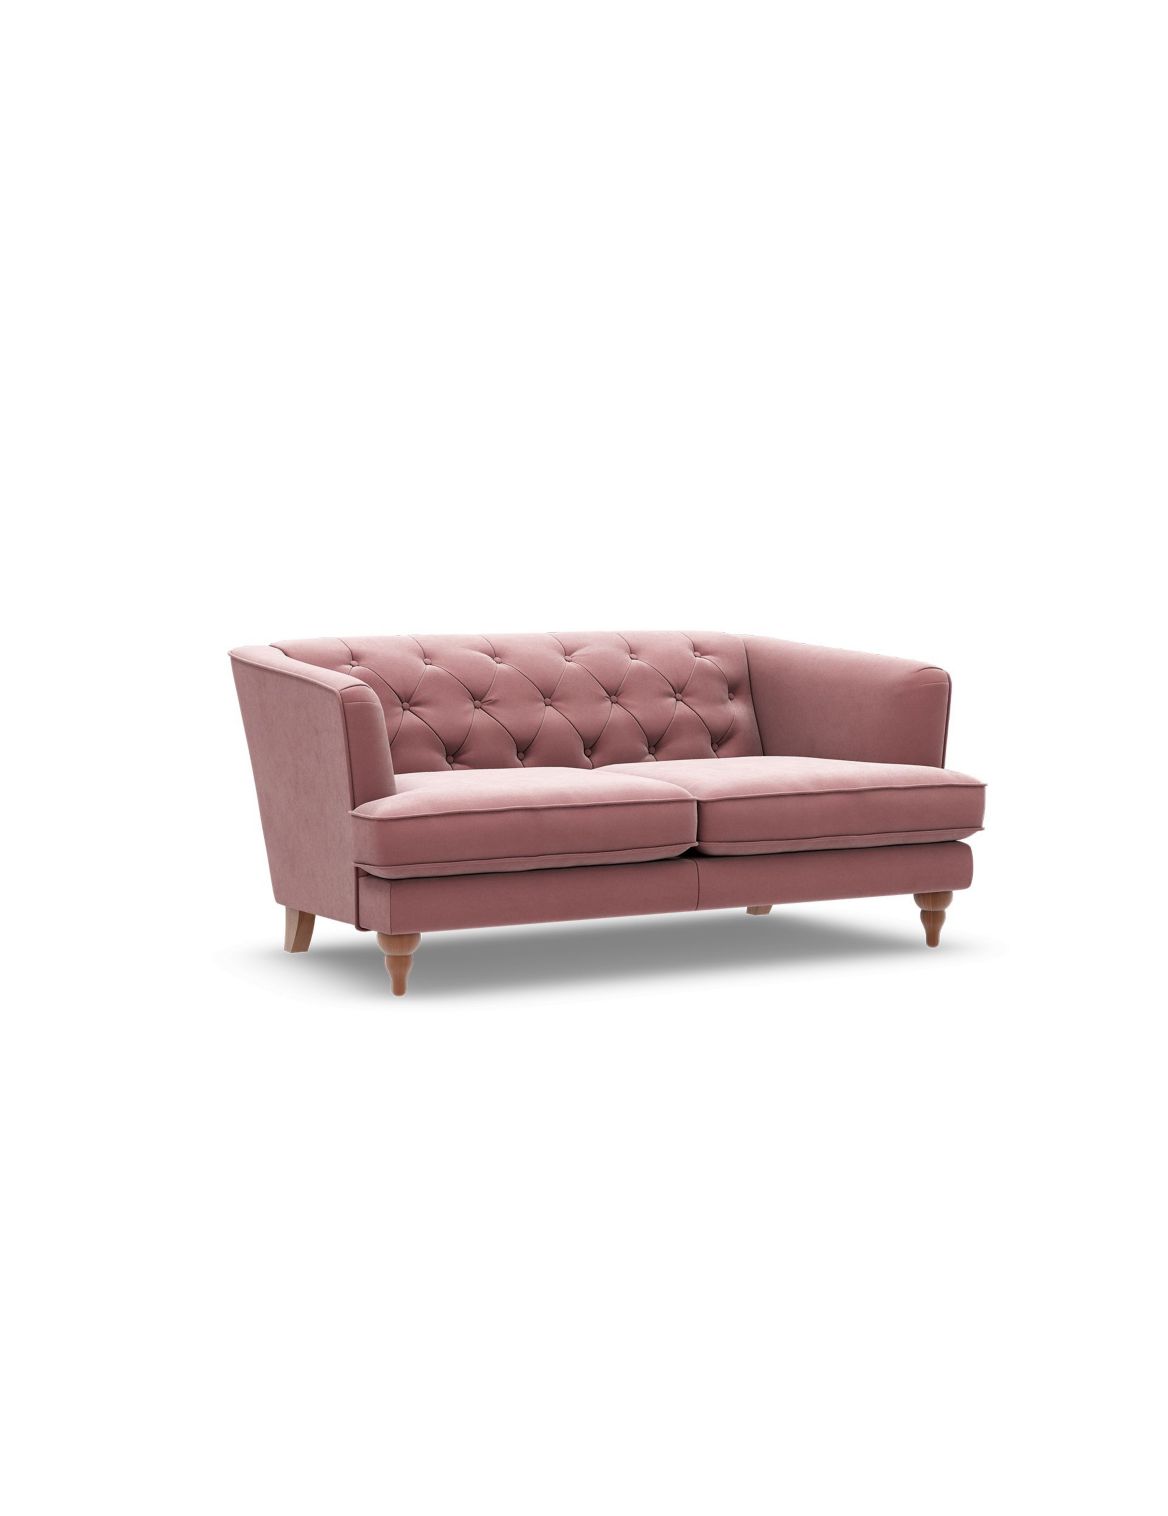 Sophia Small Sofa pink